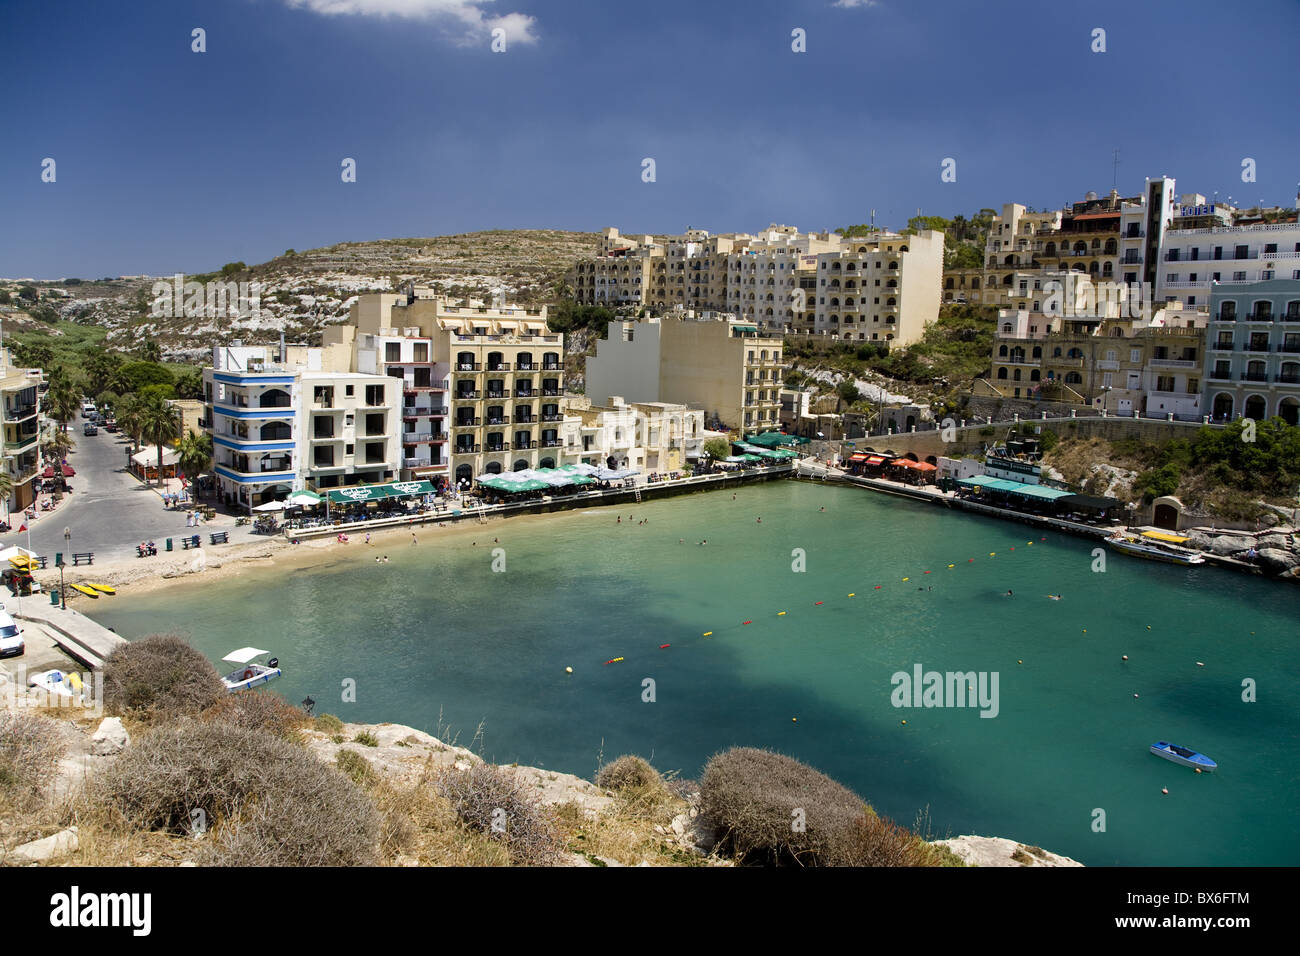 The village of Marsalforn on the Island of Gozo, Malta, Mediterranean, Europe Stock Photo